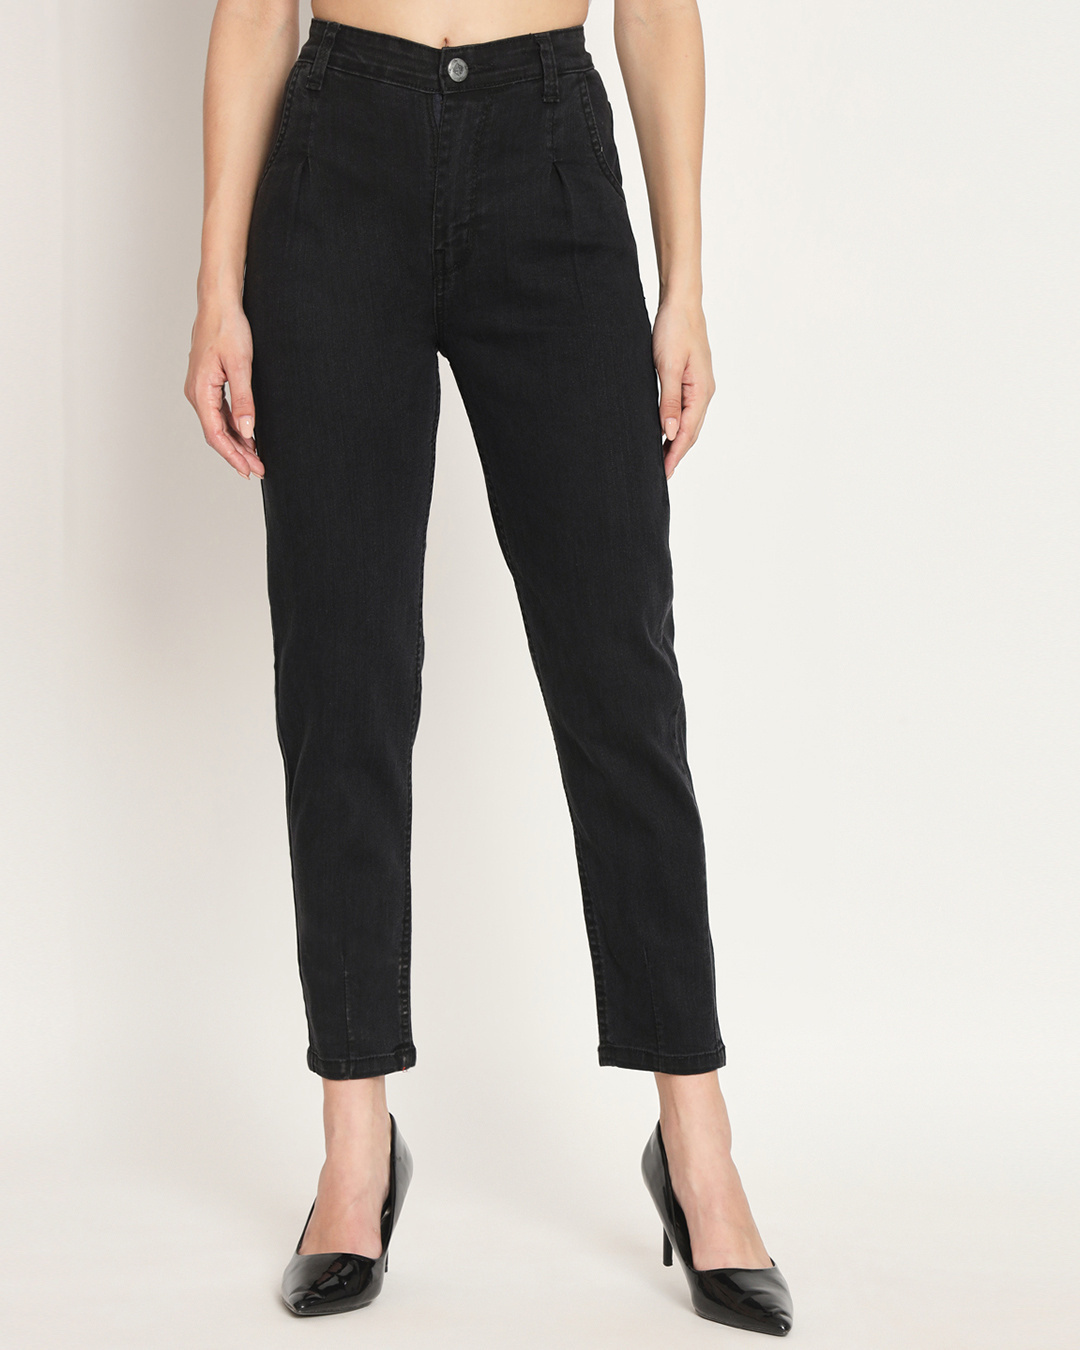 Buy Women's Black Slim Fit Jeans for Women Online at Bewakoof